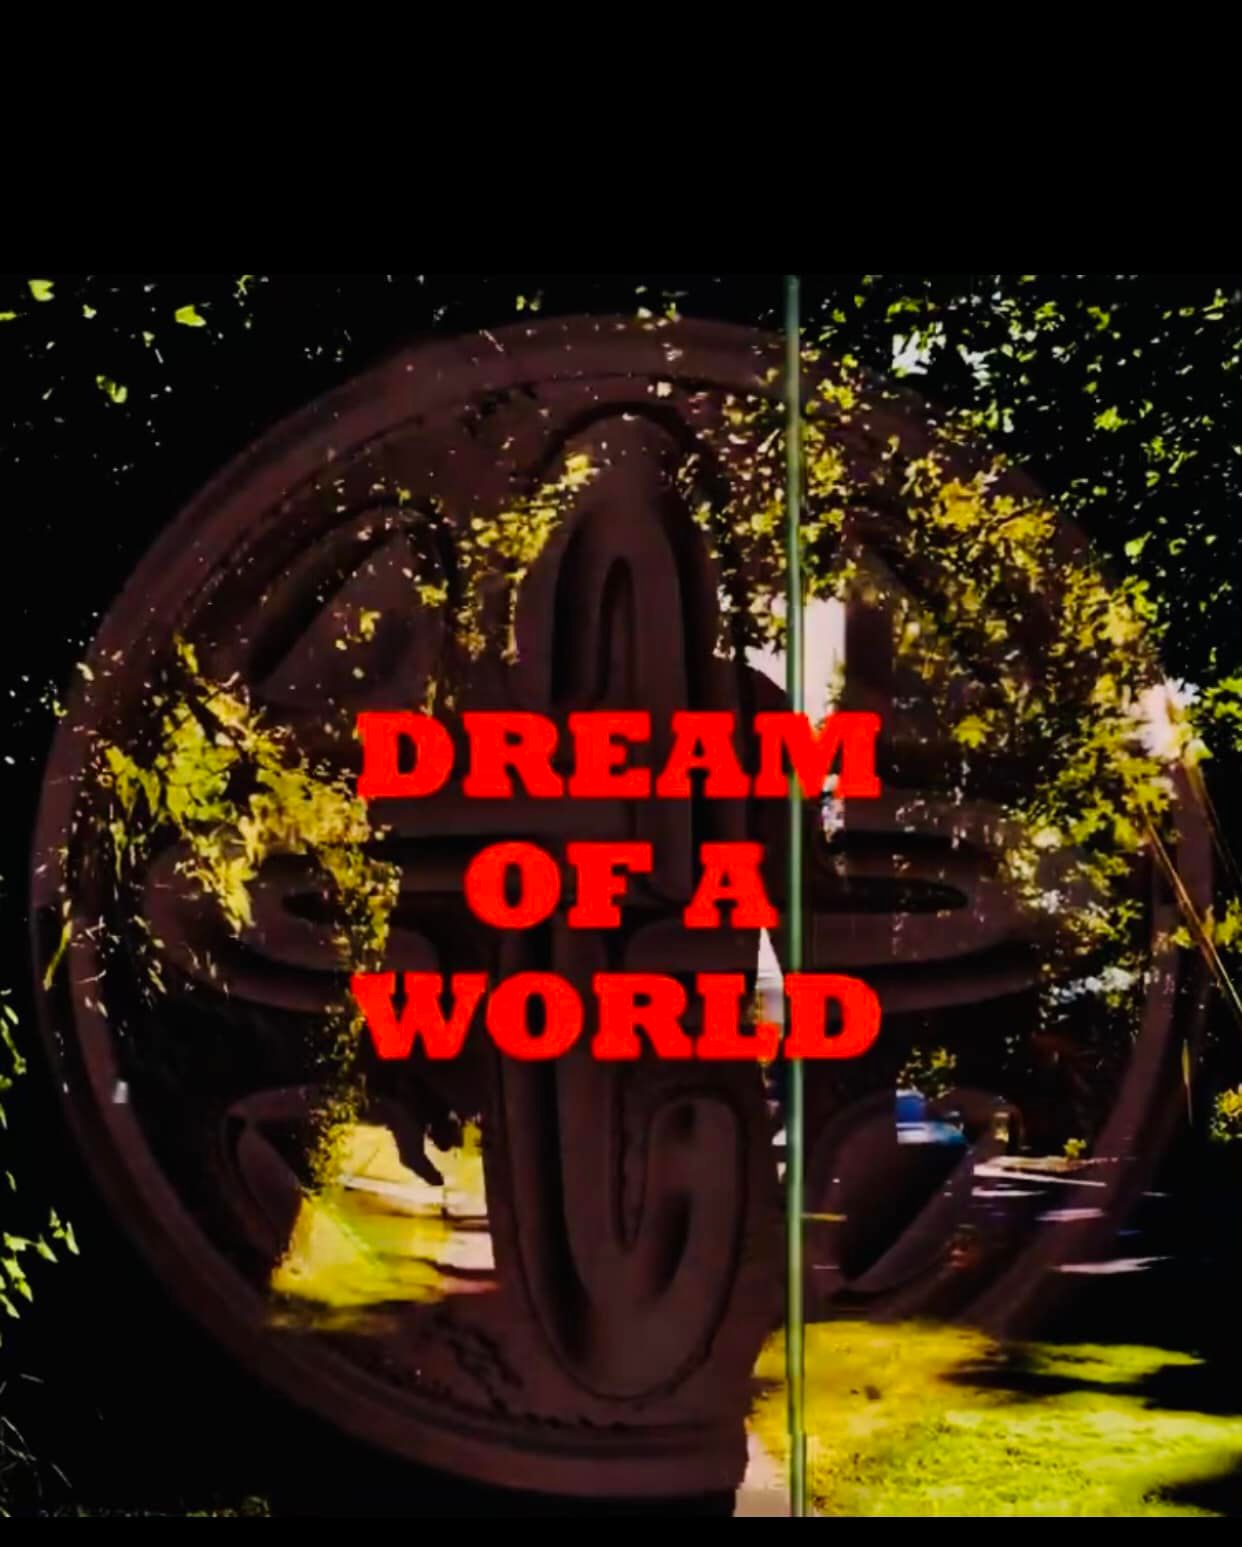 Earth To Ashes estrena el single “Dream Of A World”